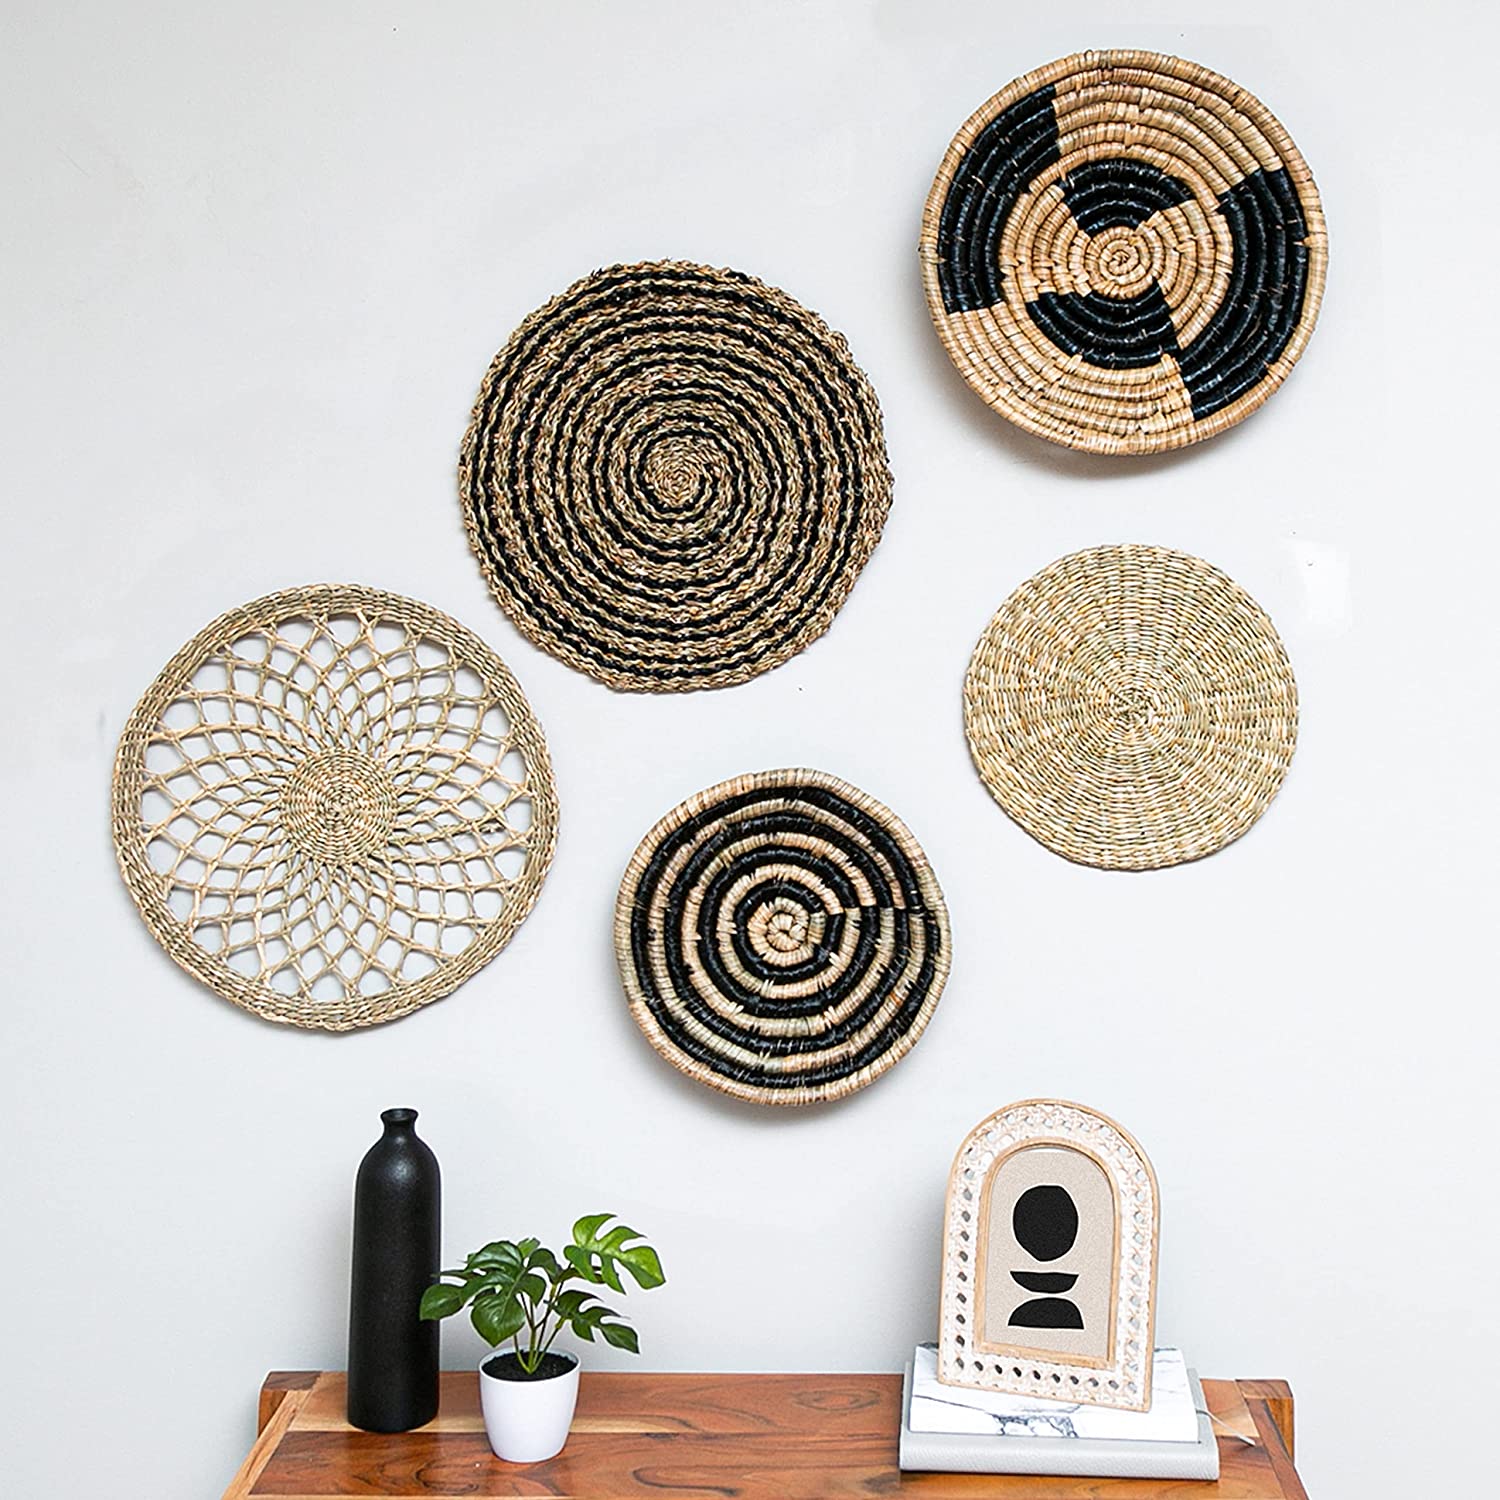 Crutello Hanging Woven Wicker Basket Set - Set of 5 Handwoven Seagrass Flat Baskets Boho Wall Decor - Rustic Circular Weave